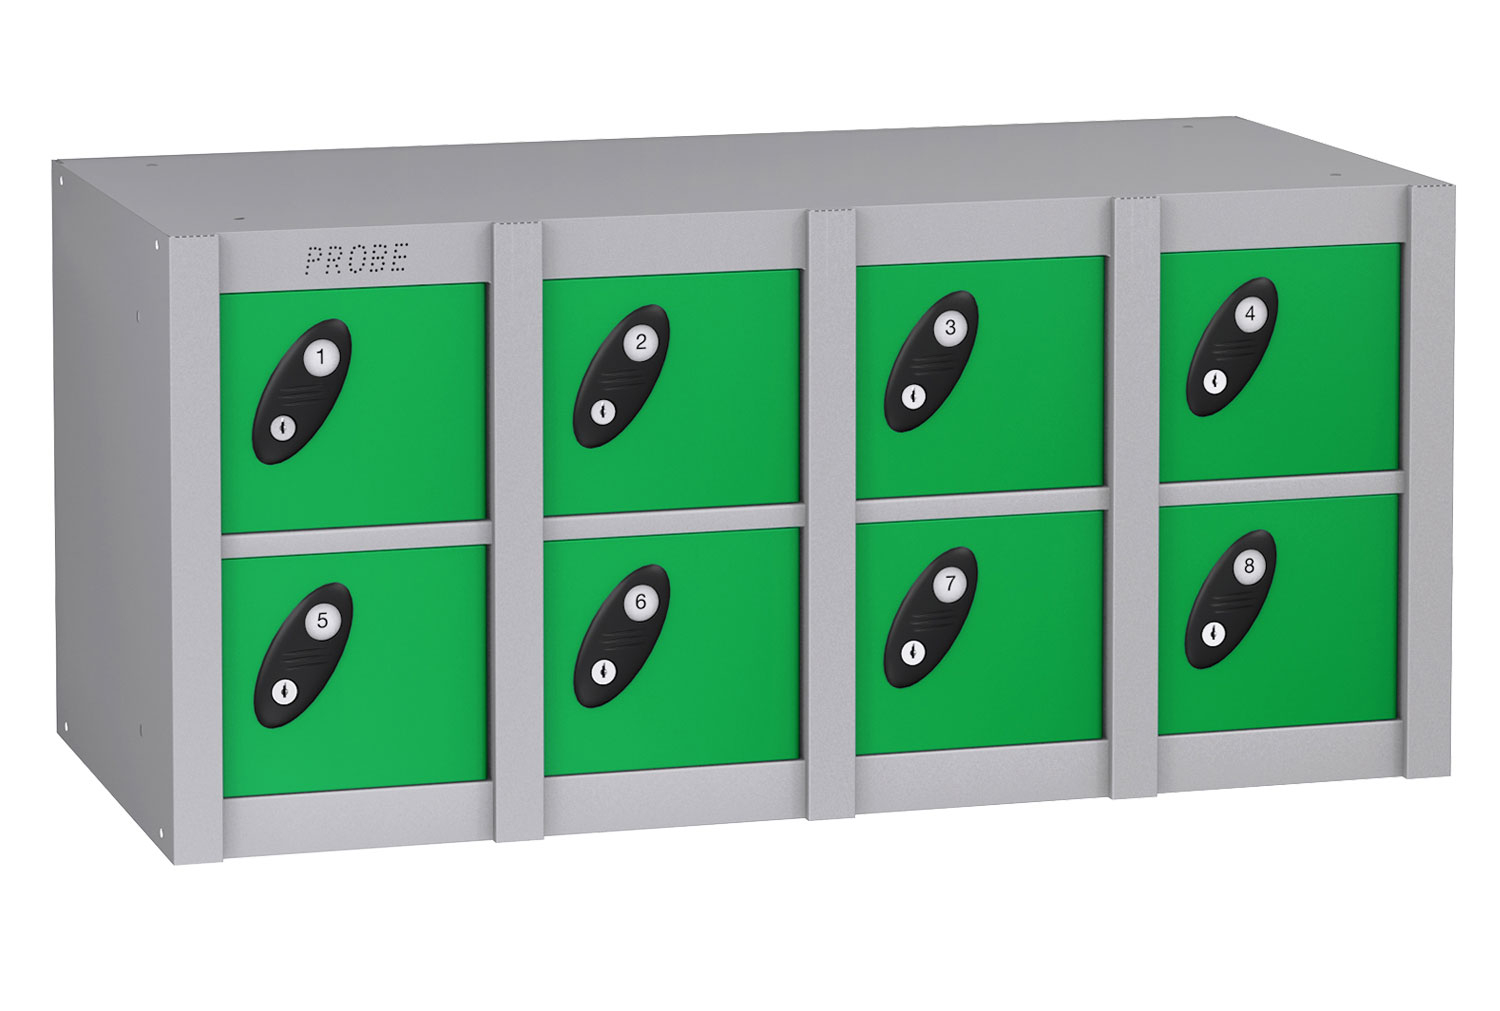 Probe 8 Door MiniBox Lockers, Hasp Lock, White Body, Green